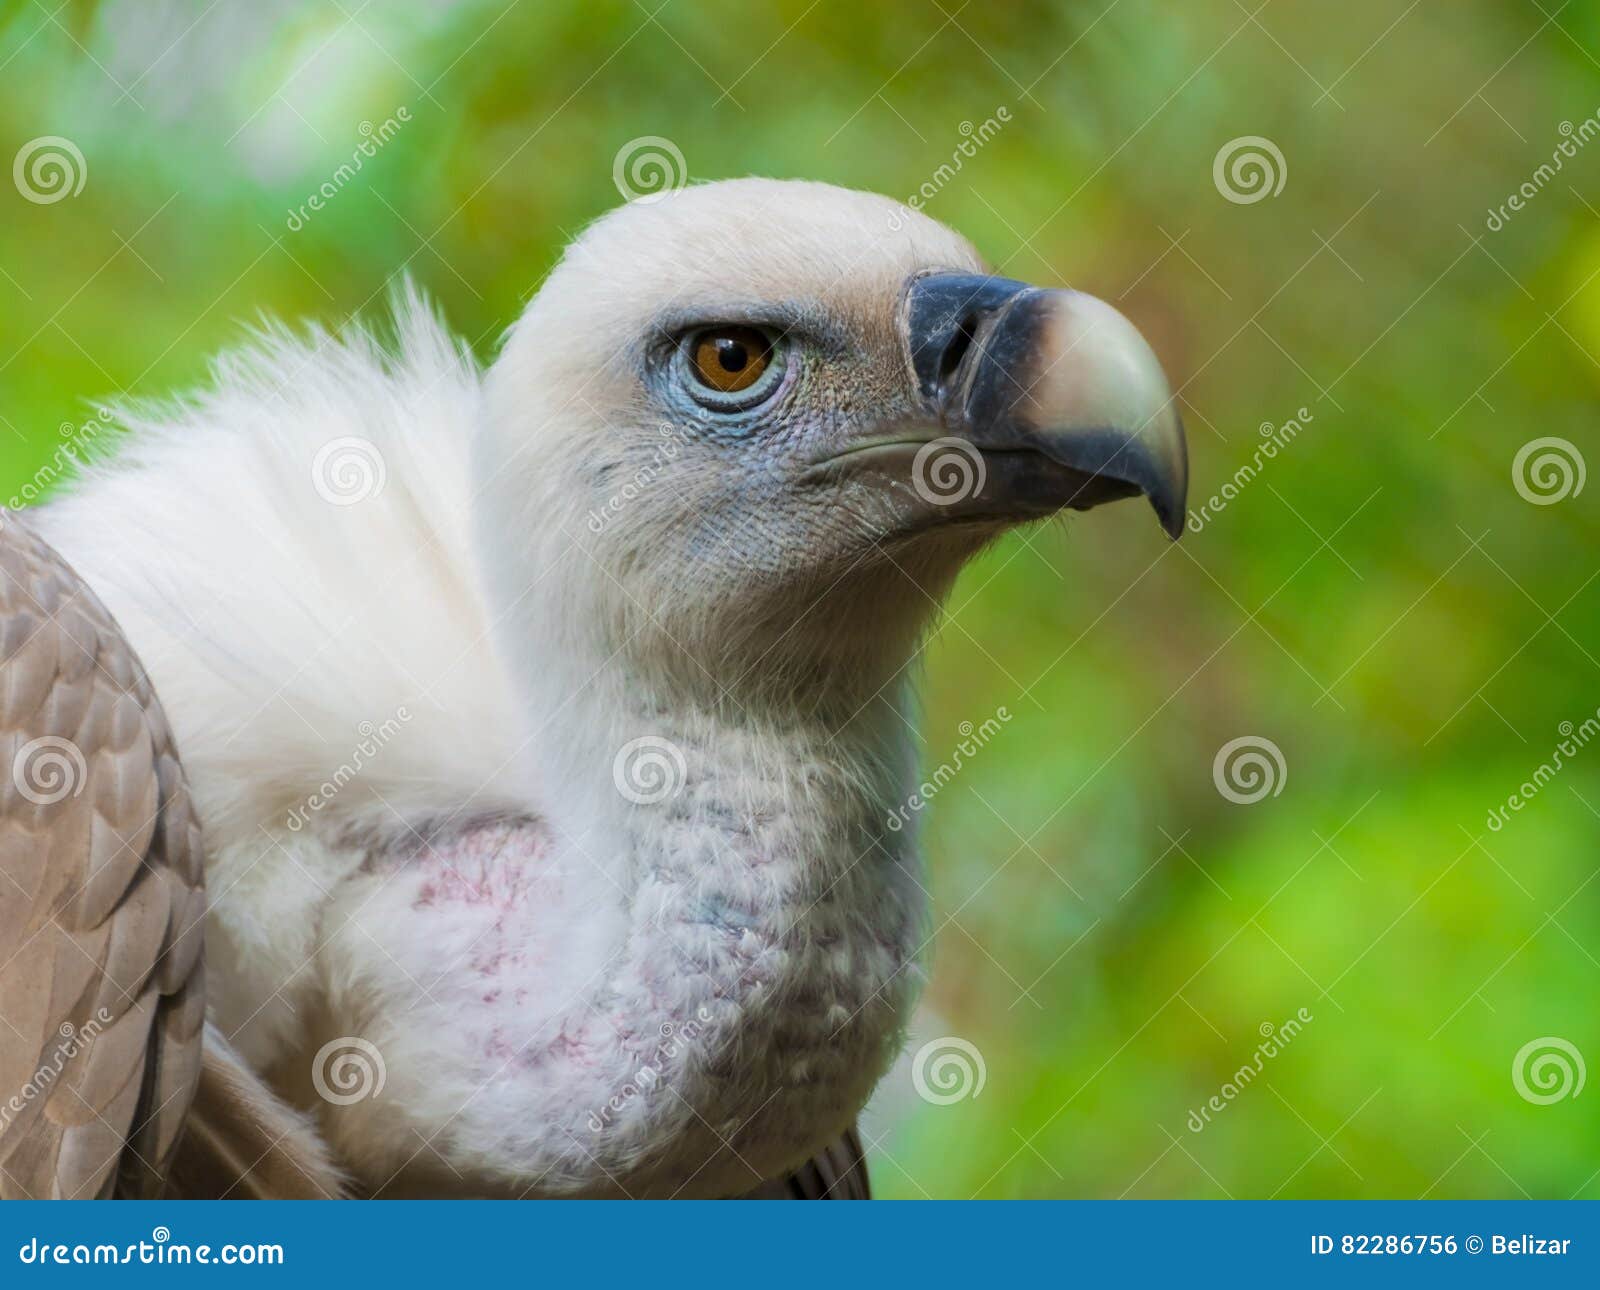 Griffon vulture head stock photo. Image of gyps, portrait - 82286756